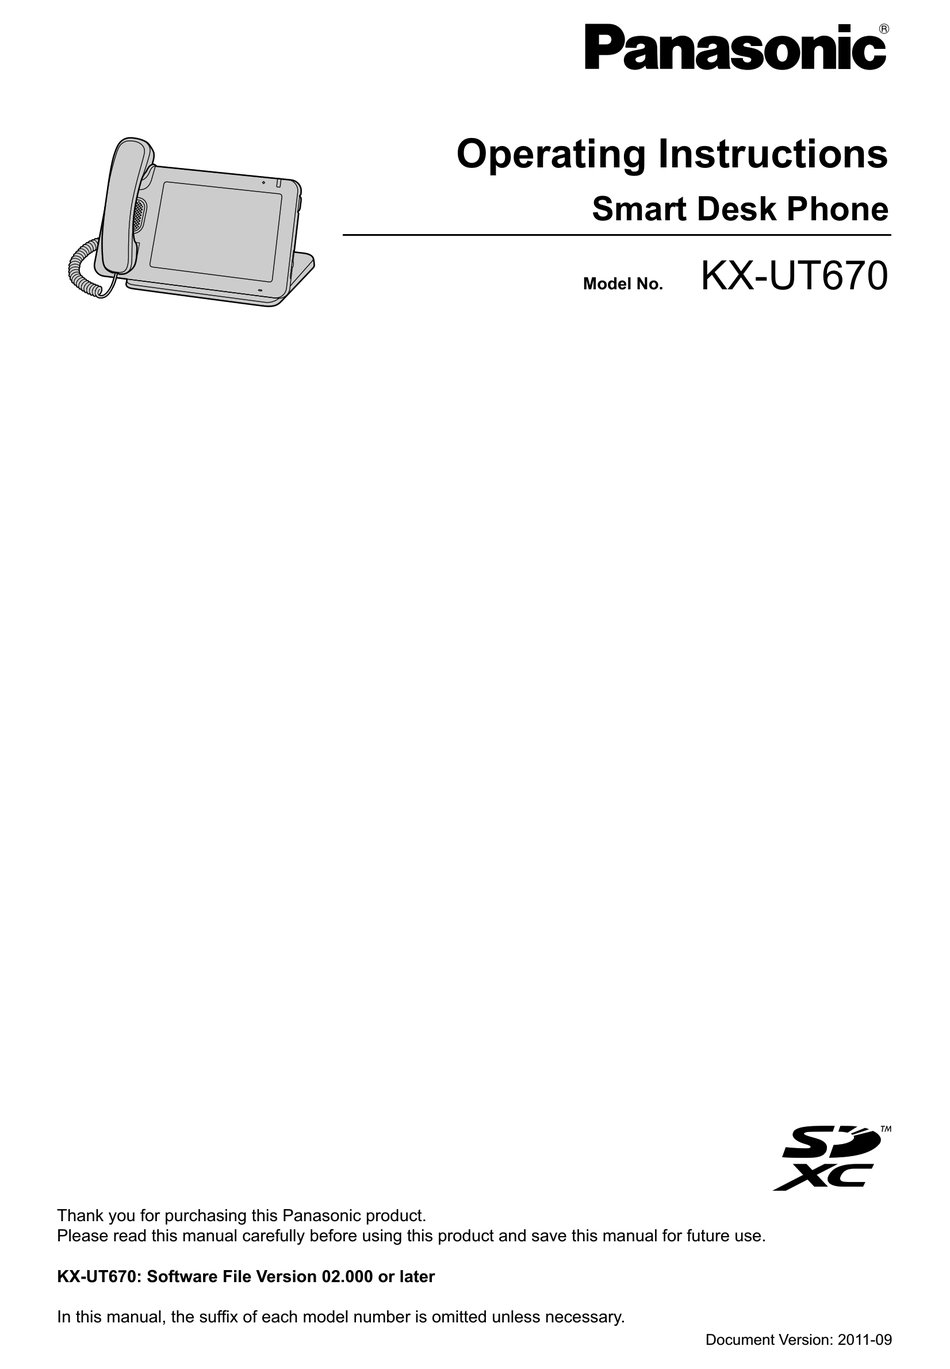 PANASONIC KX-UT22 OPERATING INSTRUCTIONS MANUAL Pdf Download Pertaining To Panasonic Phone Label Template